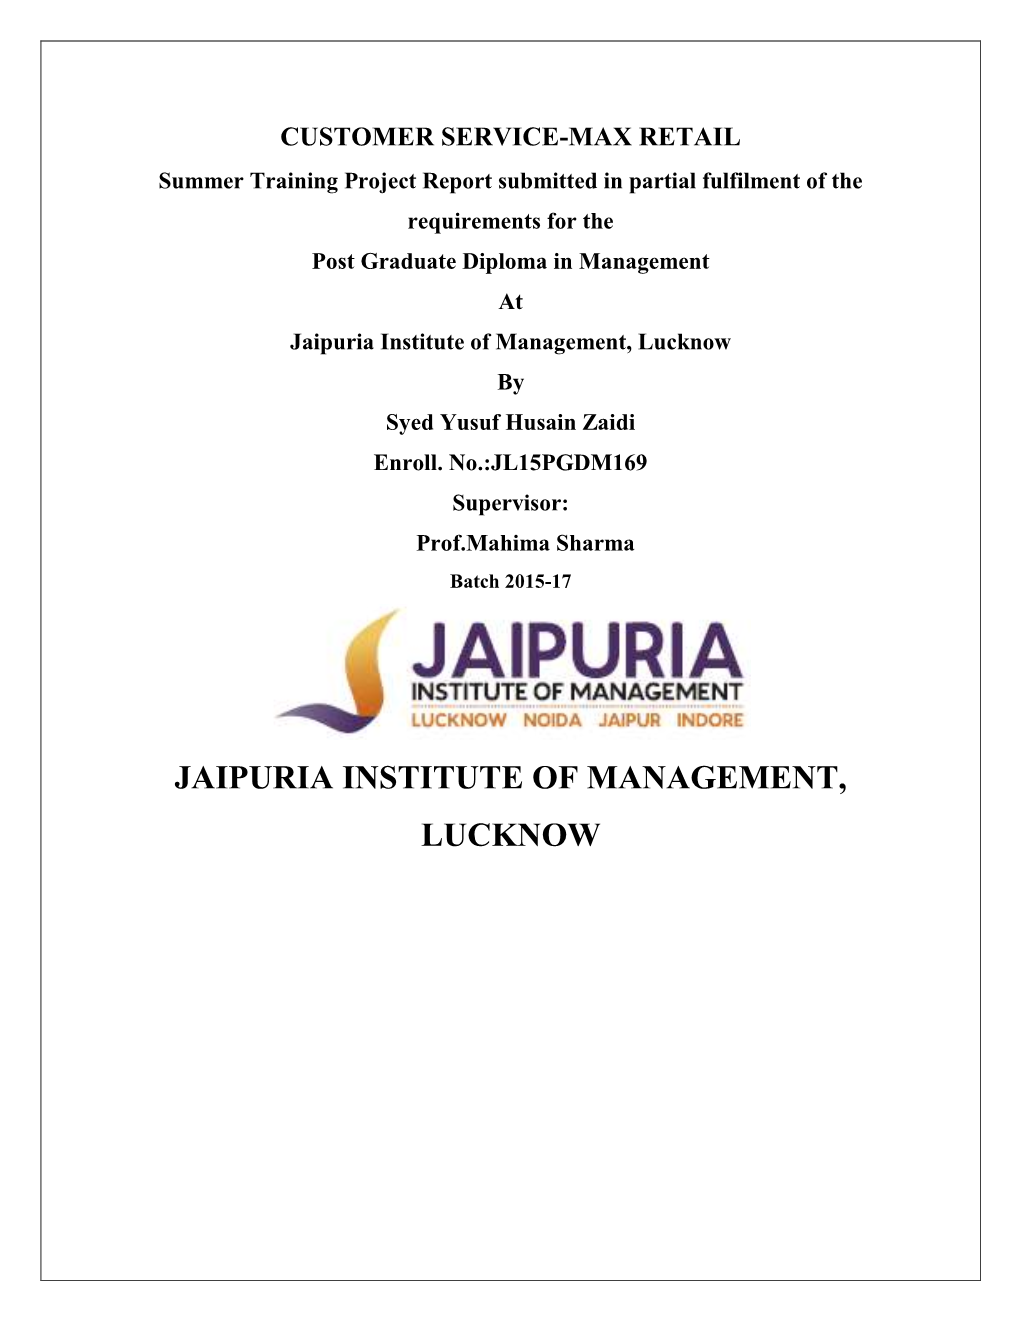 Jaipuria Institute of Management, Lucknow by Syed Yusuf Husain Zaidi Enroll